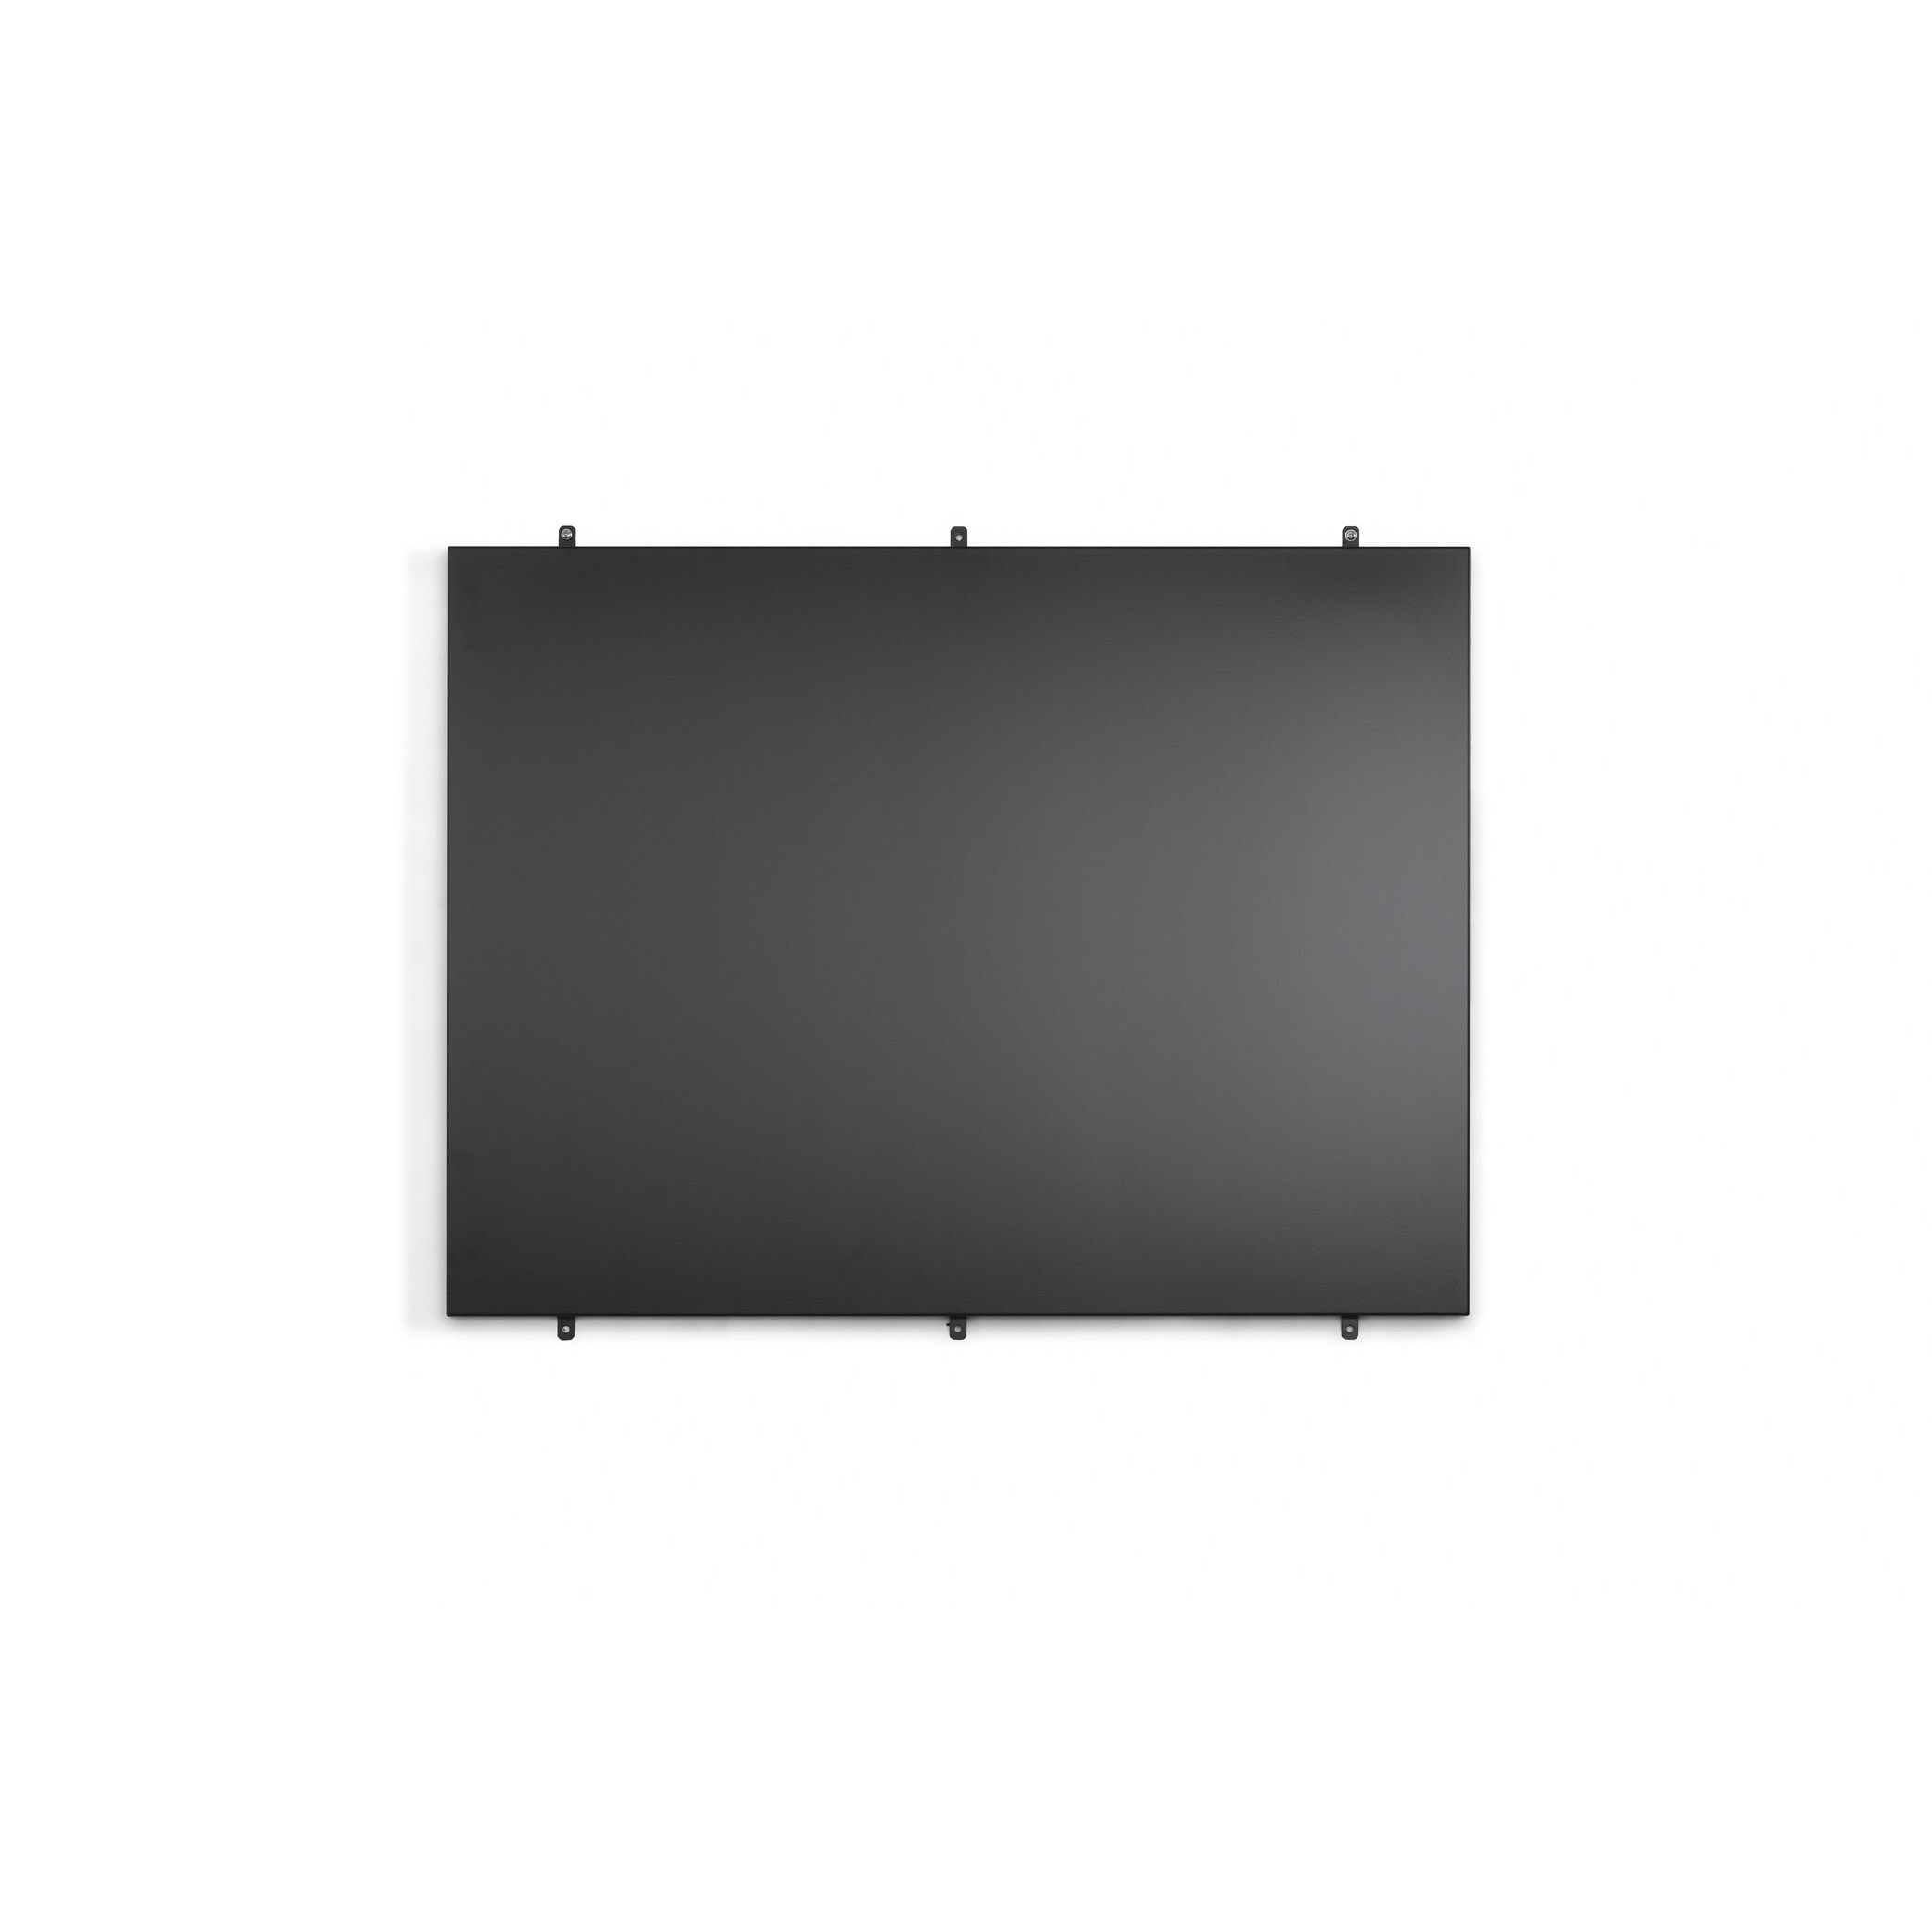 152200 Backsplash panel 90 cm black height 69 cm